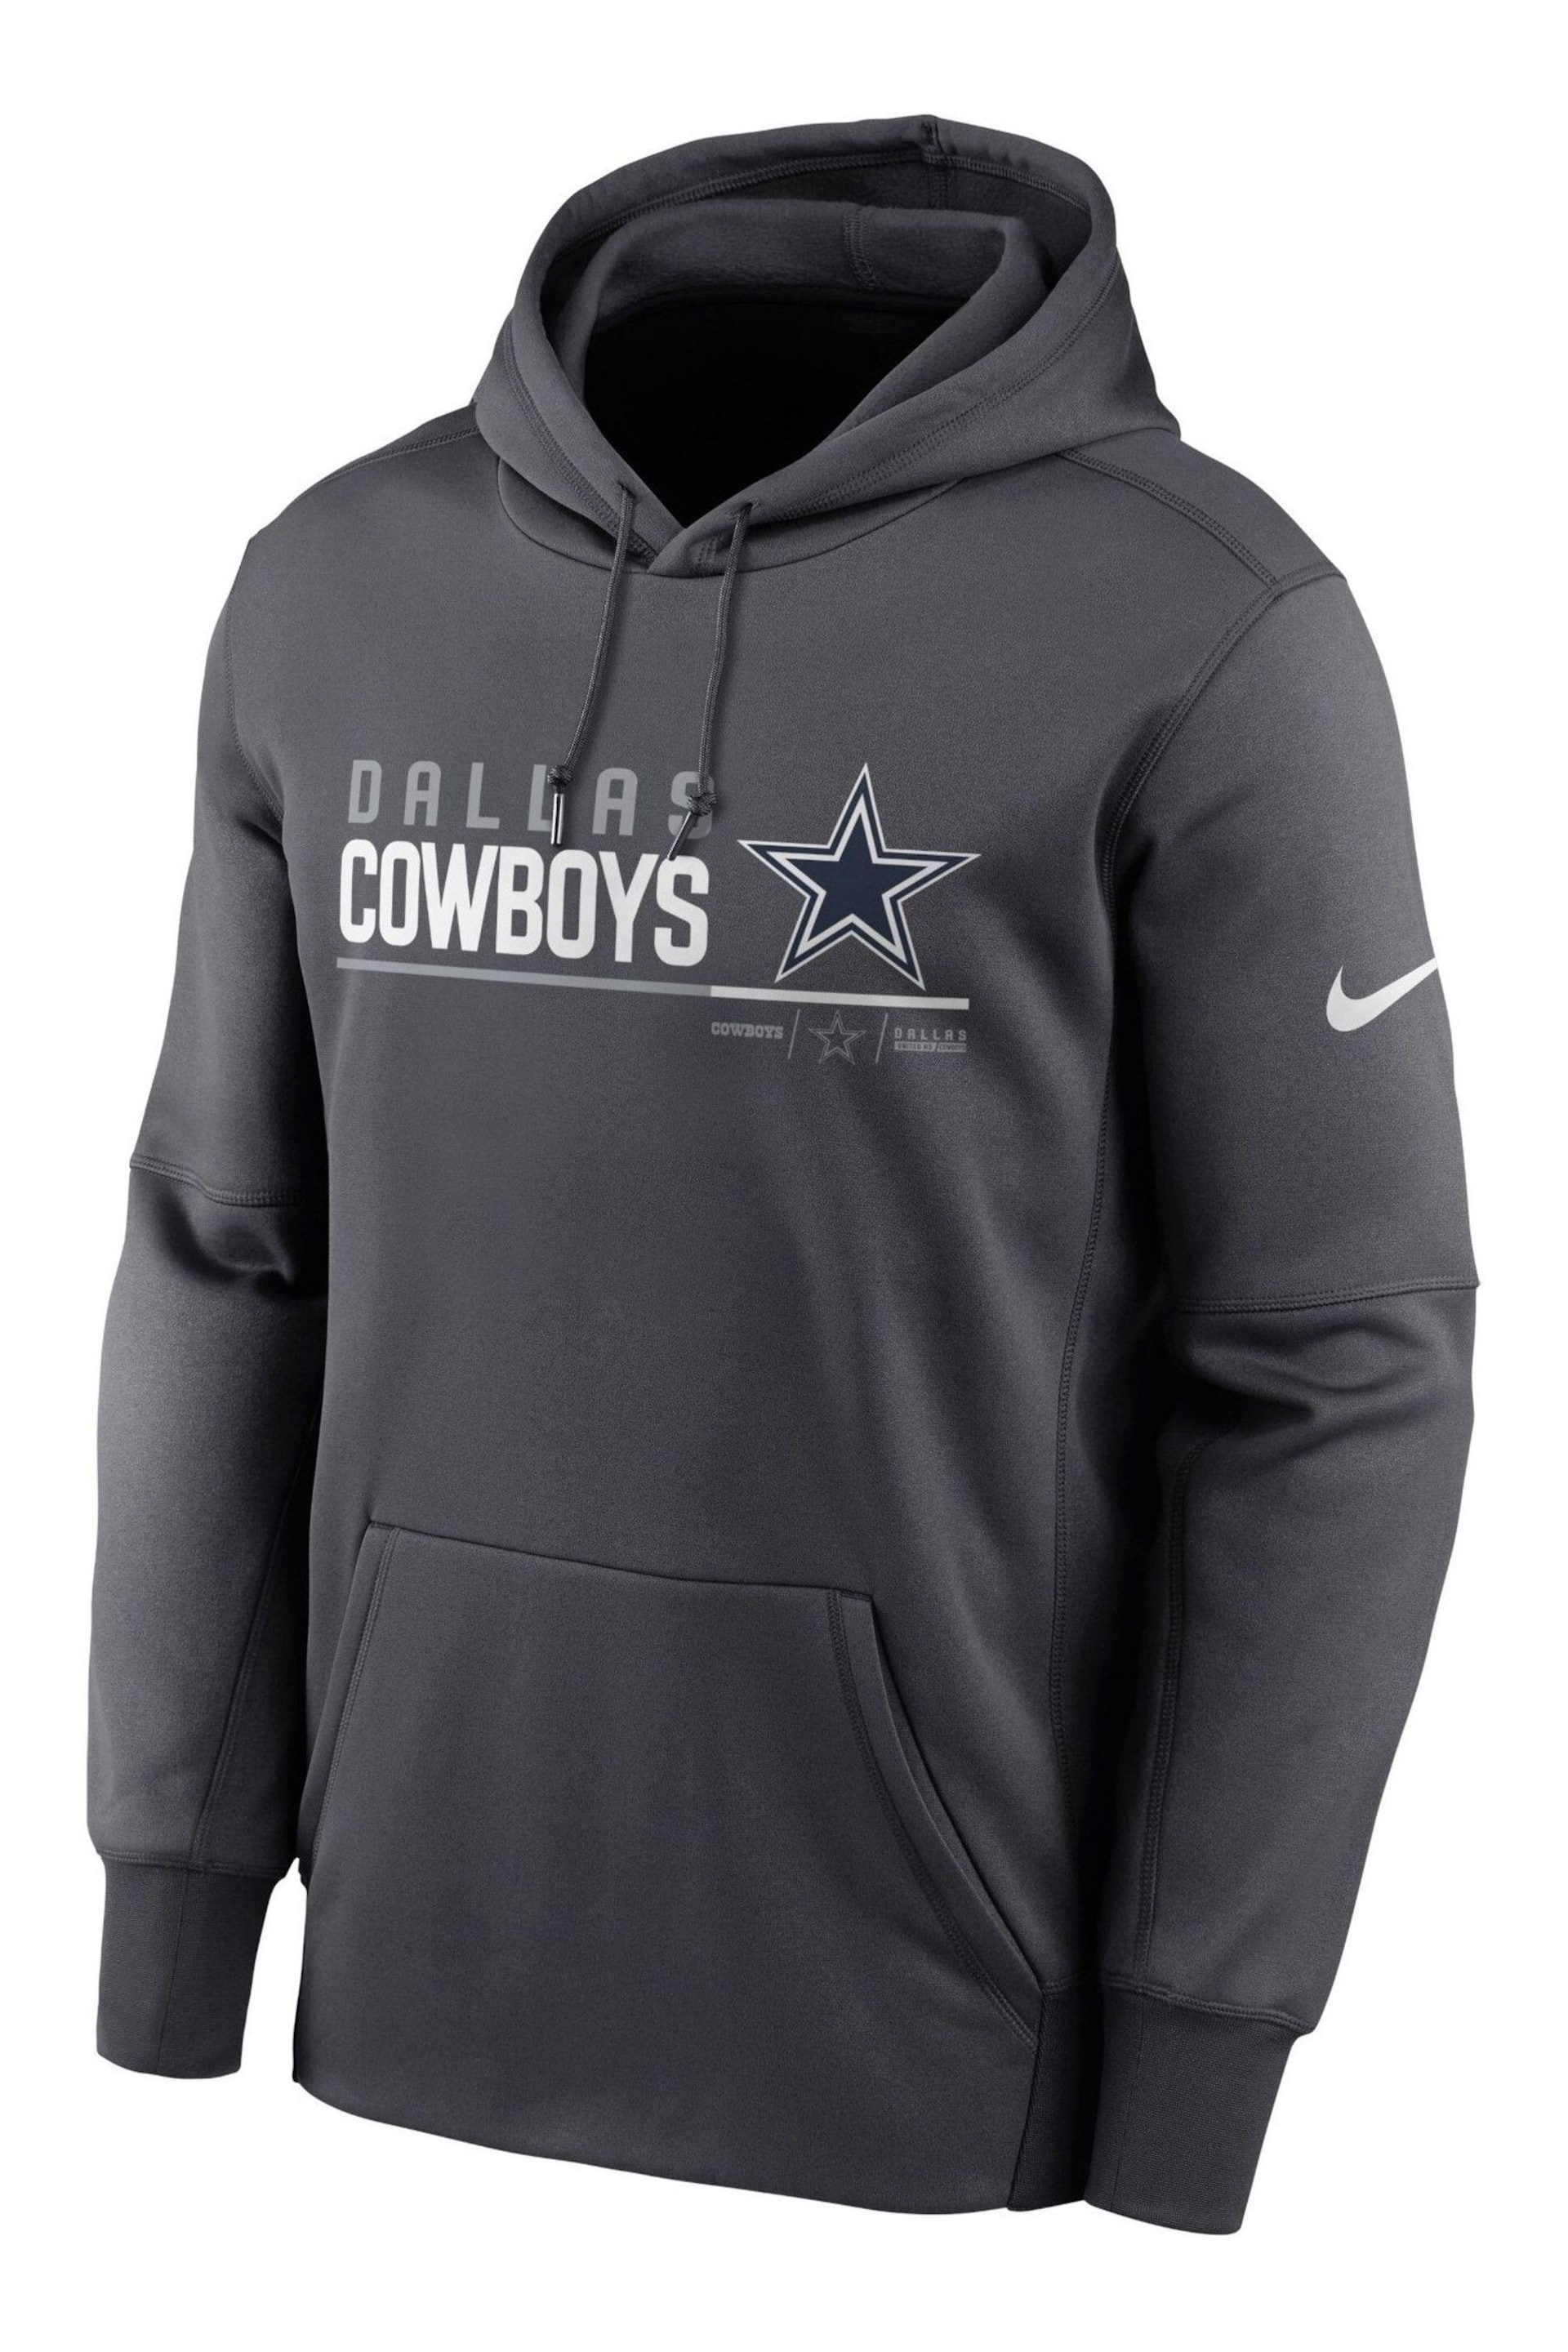 Nike Black NFL Fanatics Dallas Cowboys Therma Pullover Hoodie - Image 1 of 3